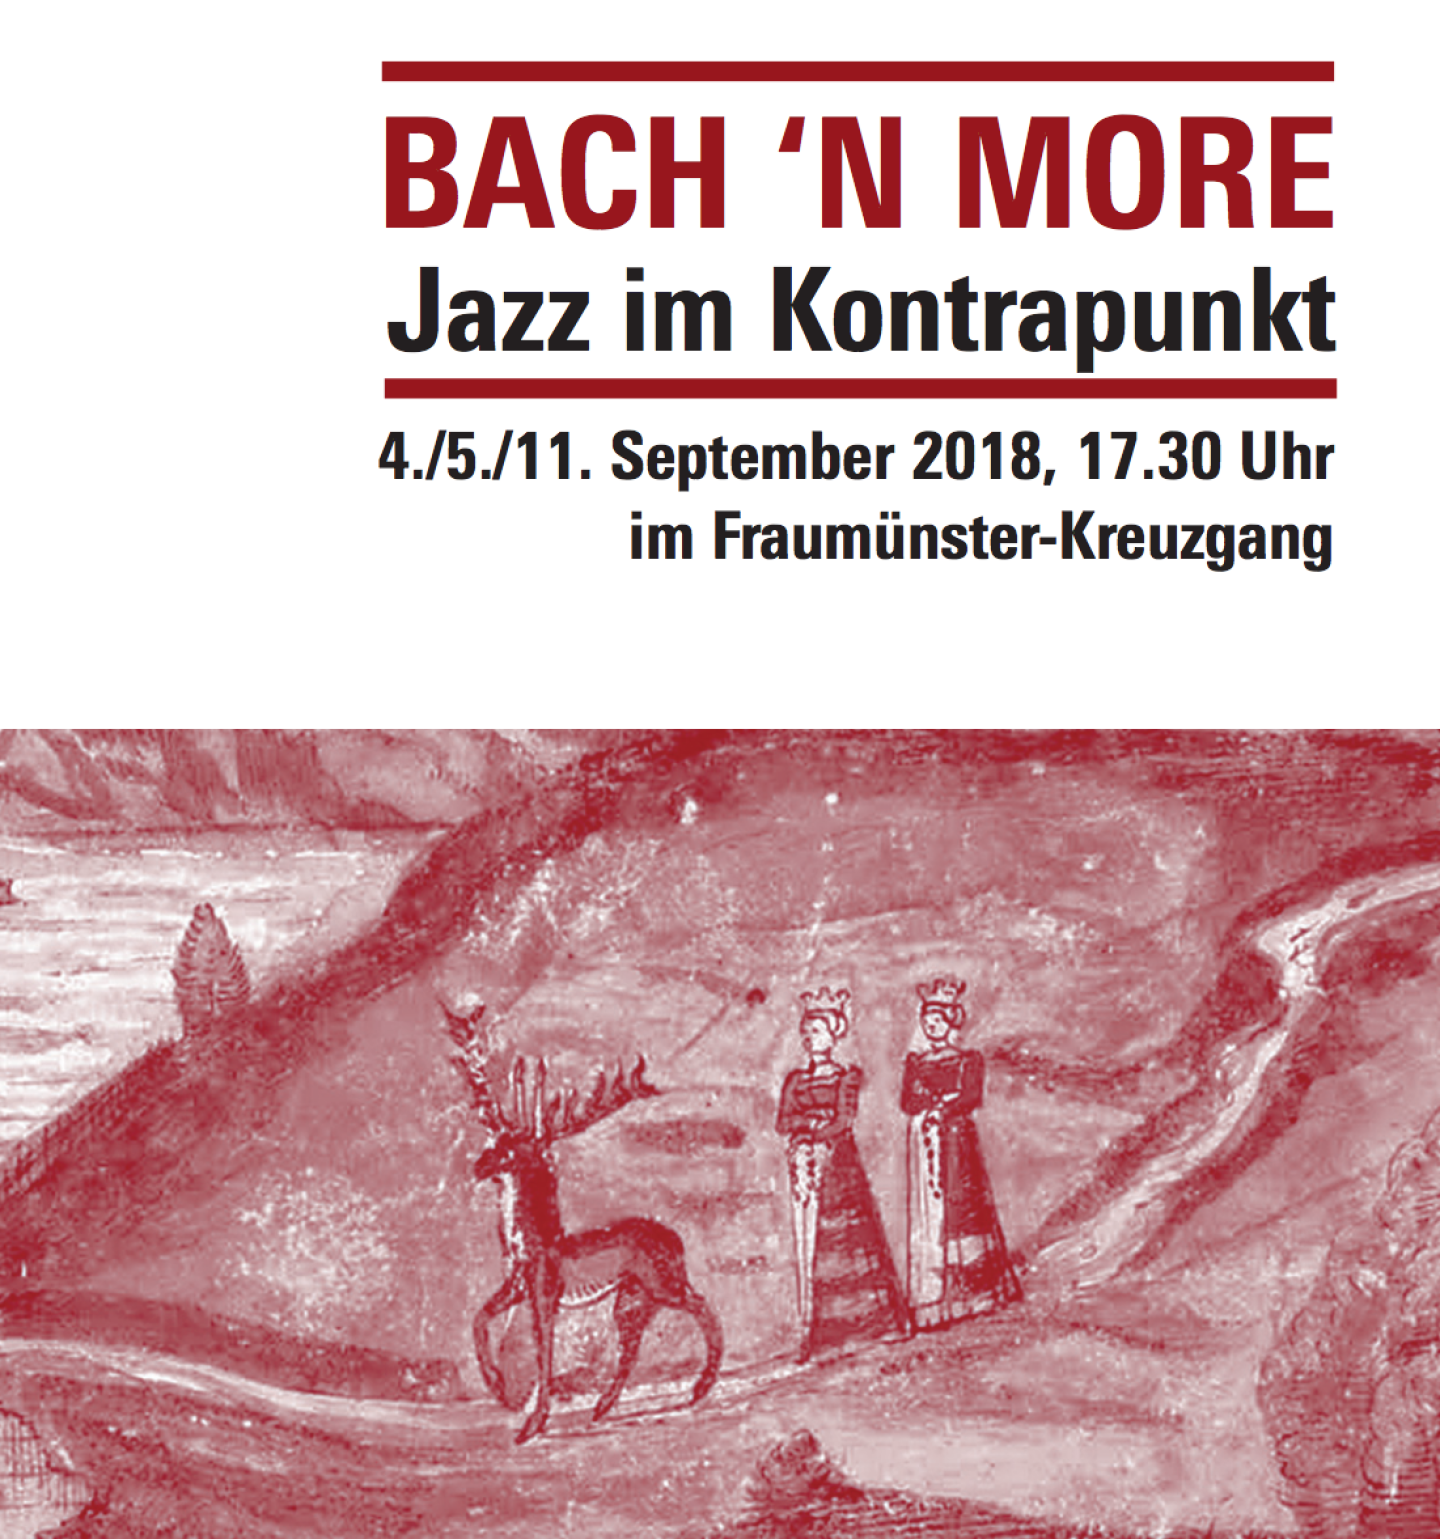 Bach 'n more Jazz im Kontrapunkt